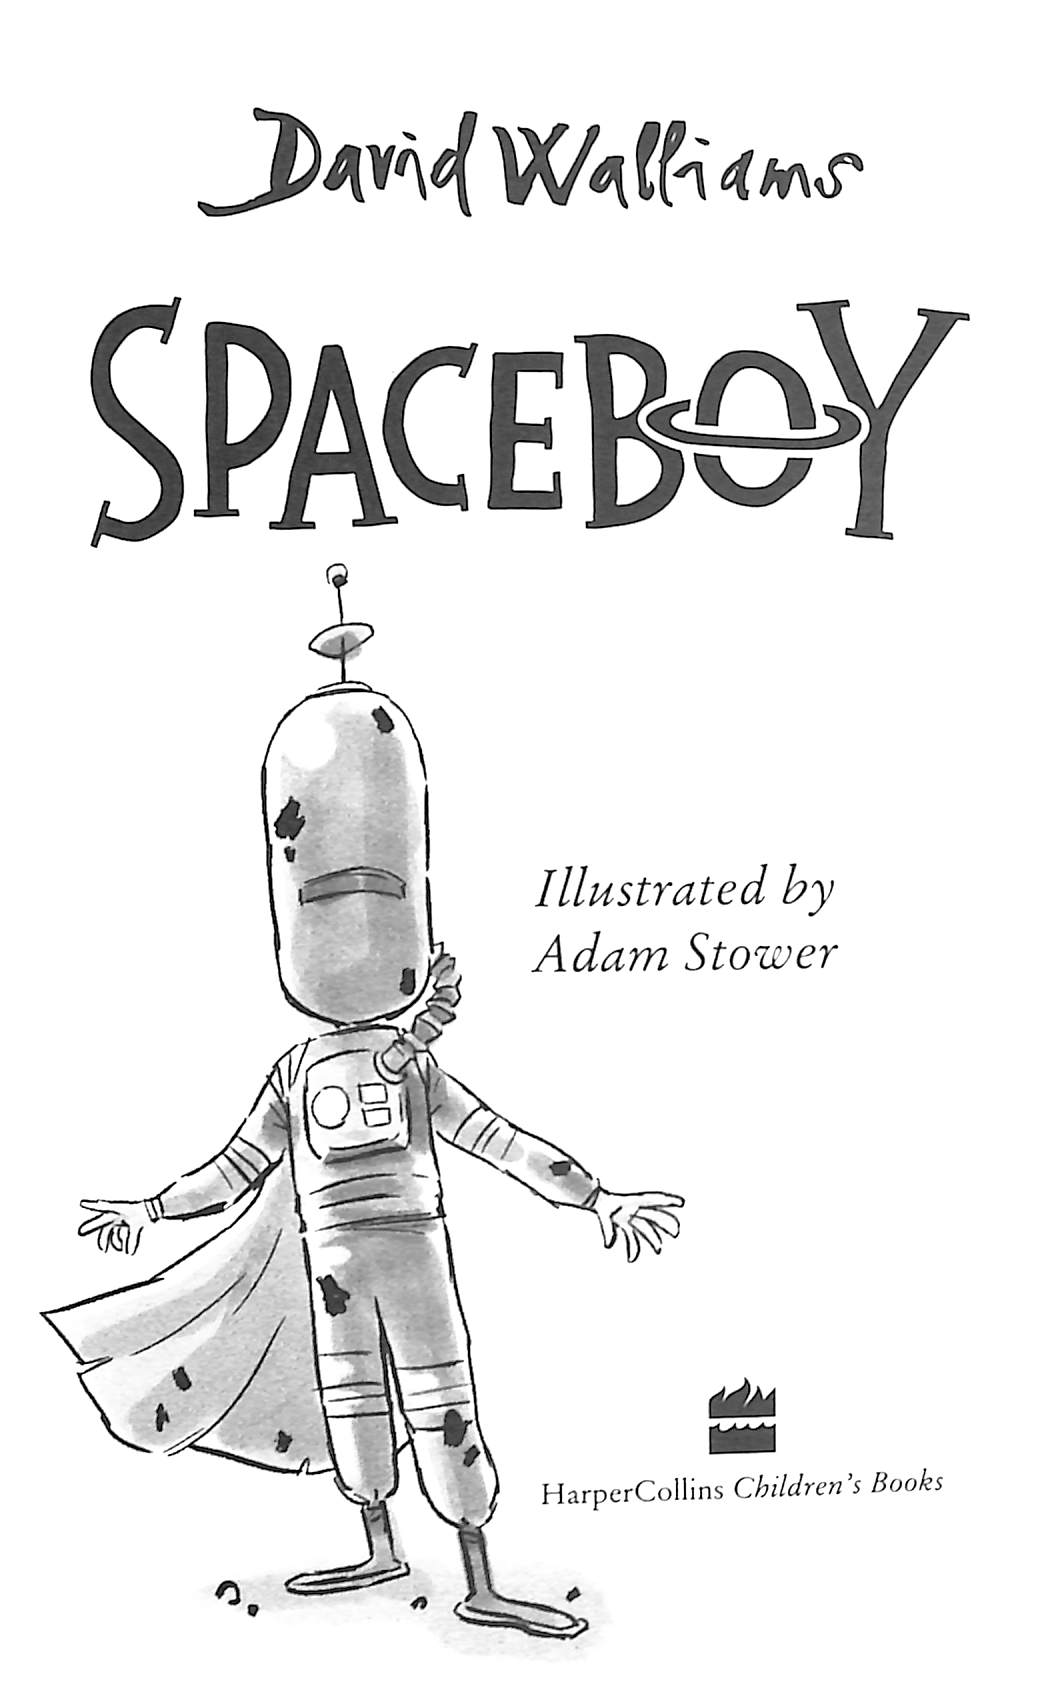 Spaceboy by David Walliams (9780008588816)